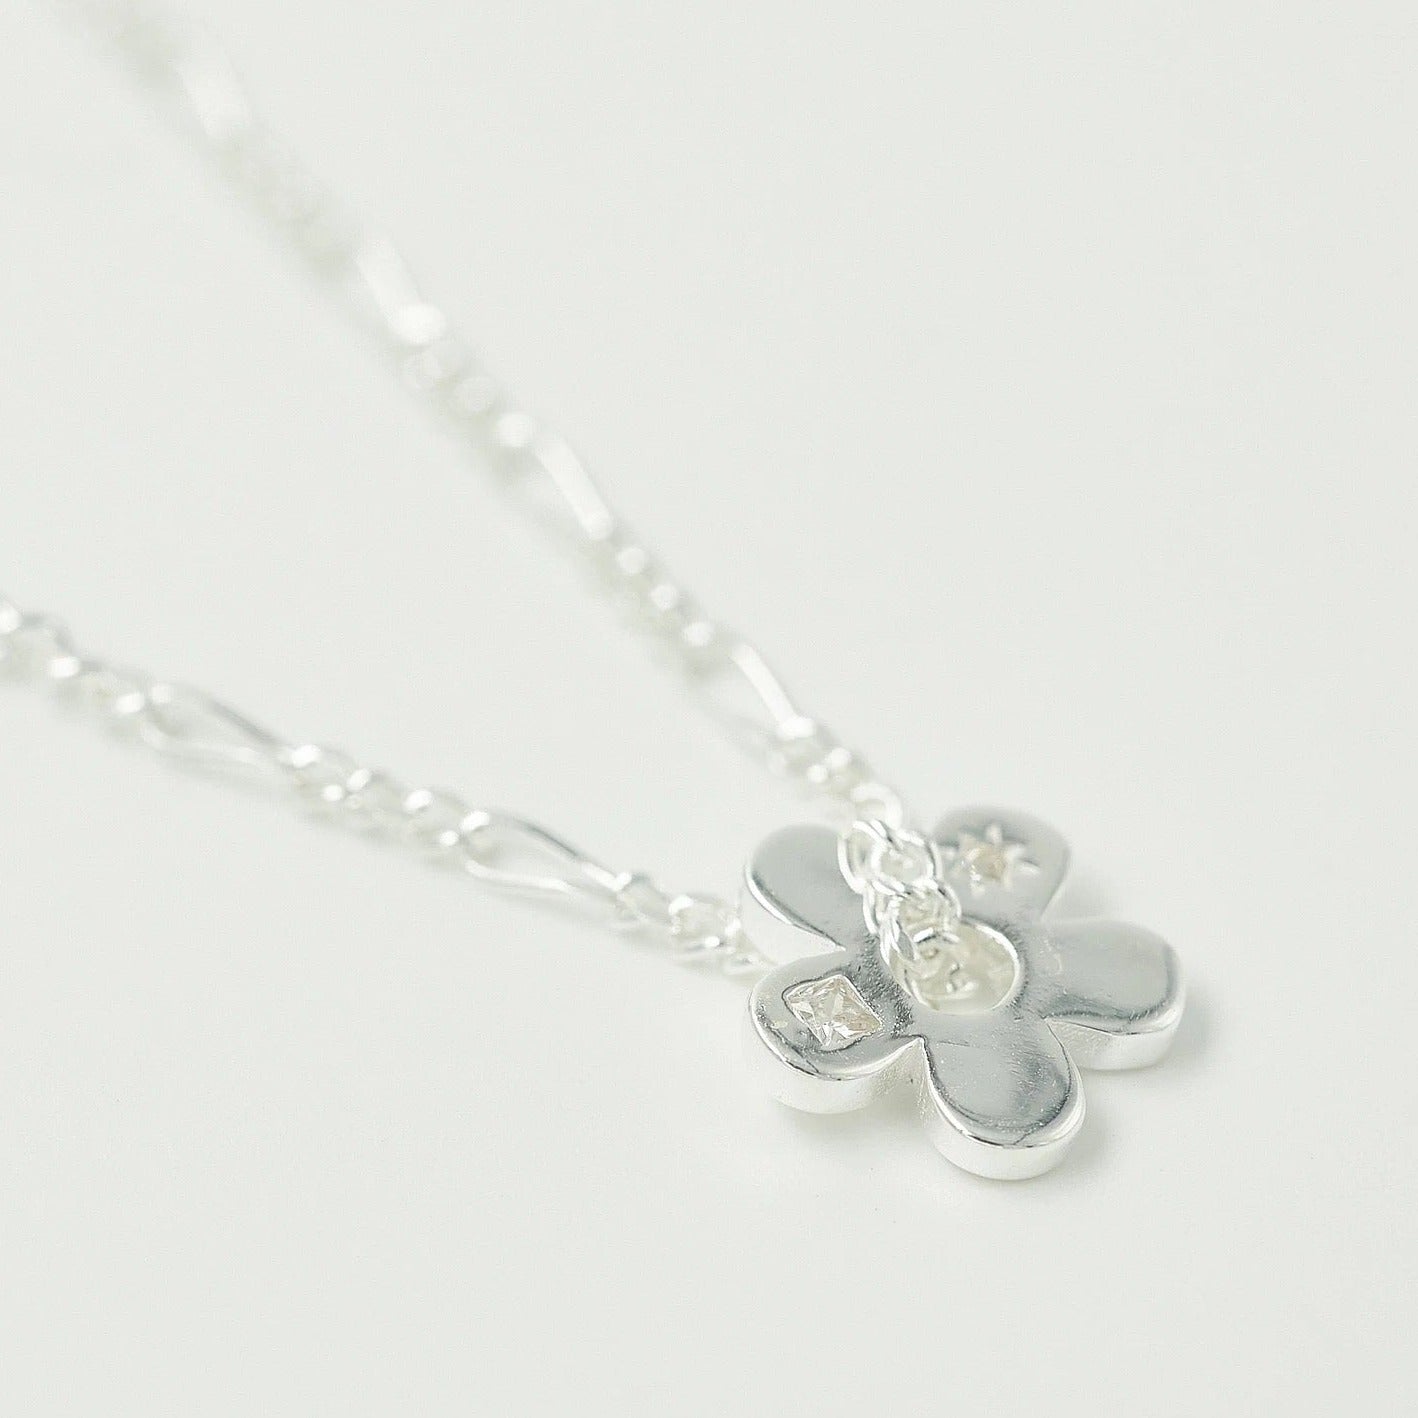 Brie Leon - 925 Signature Flower Pendant Necklace - Silver/Clear